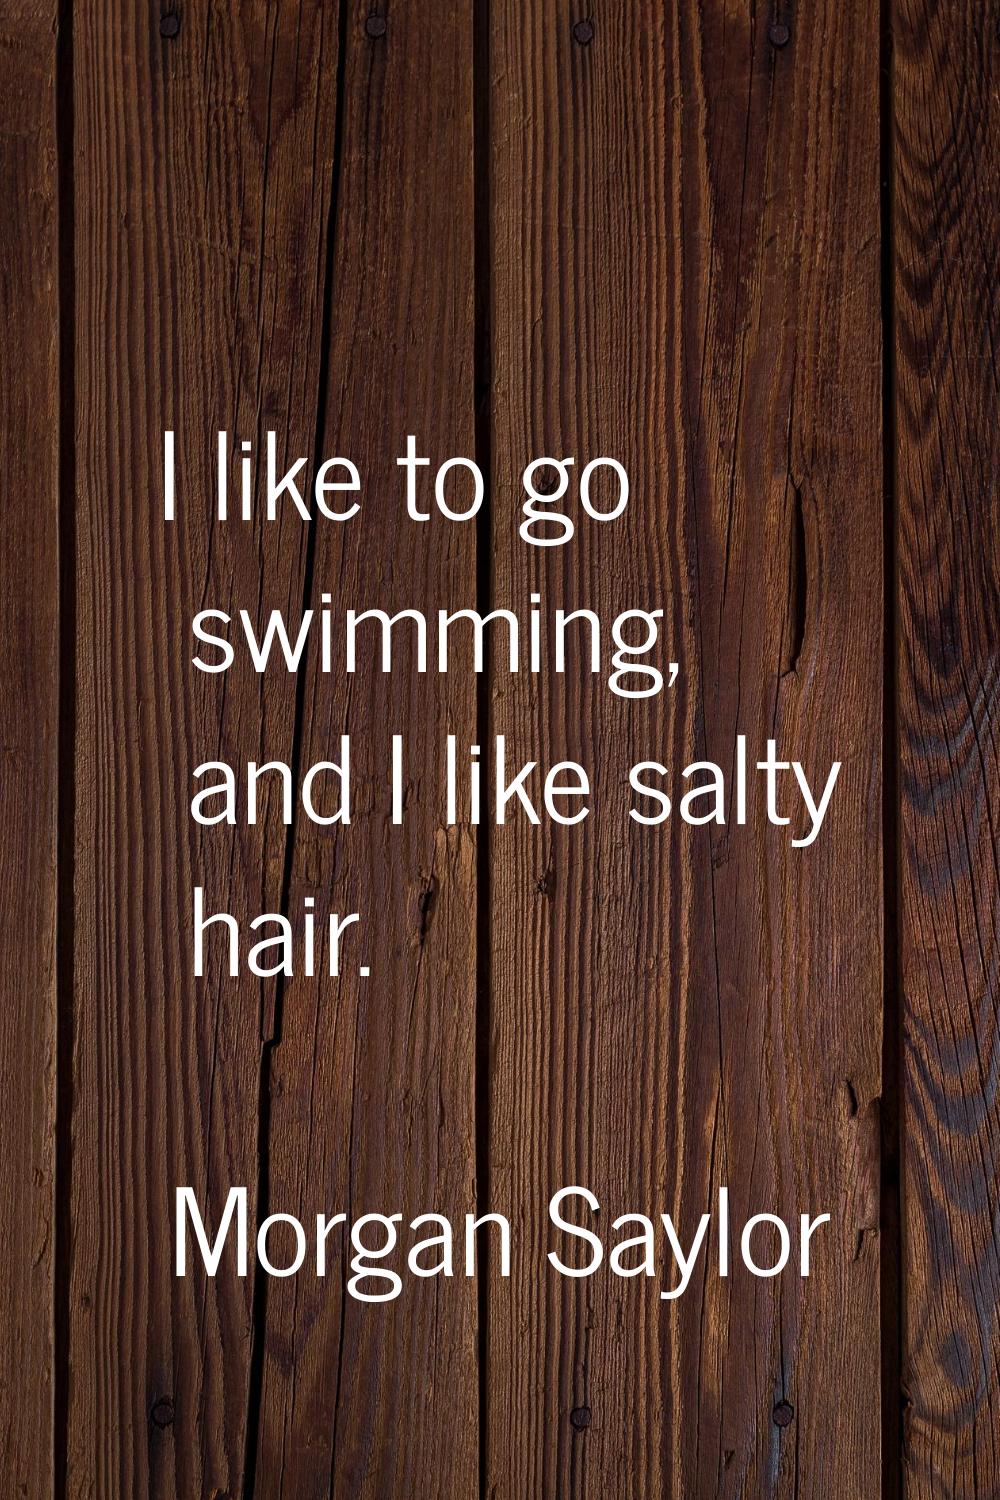 I like to go swimming, and I like salty hair.